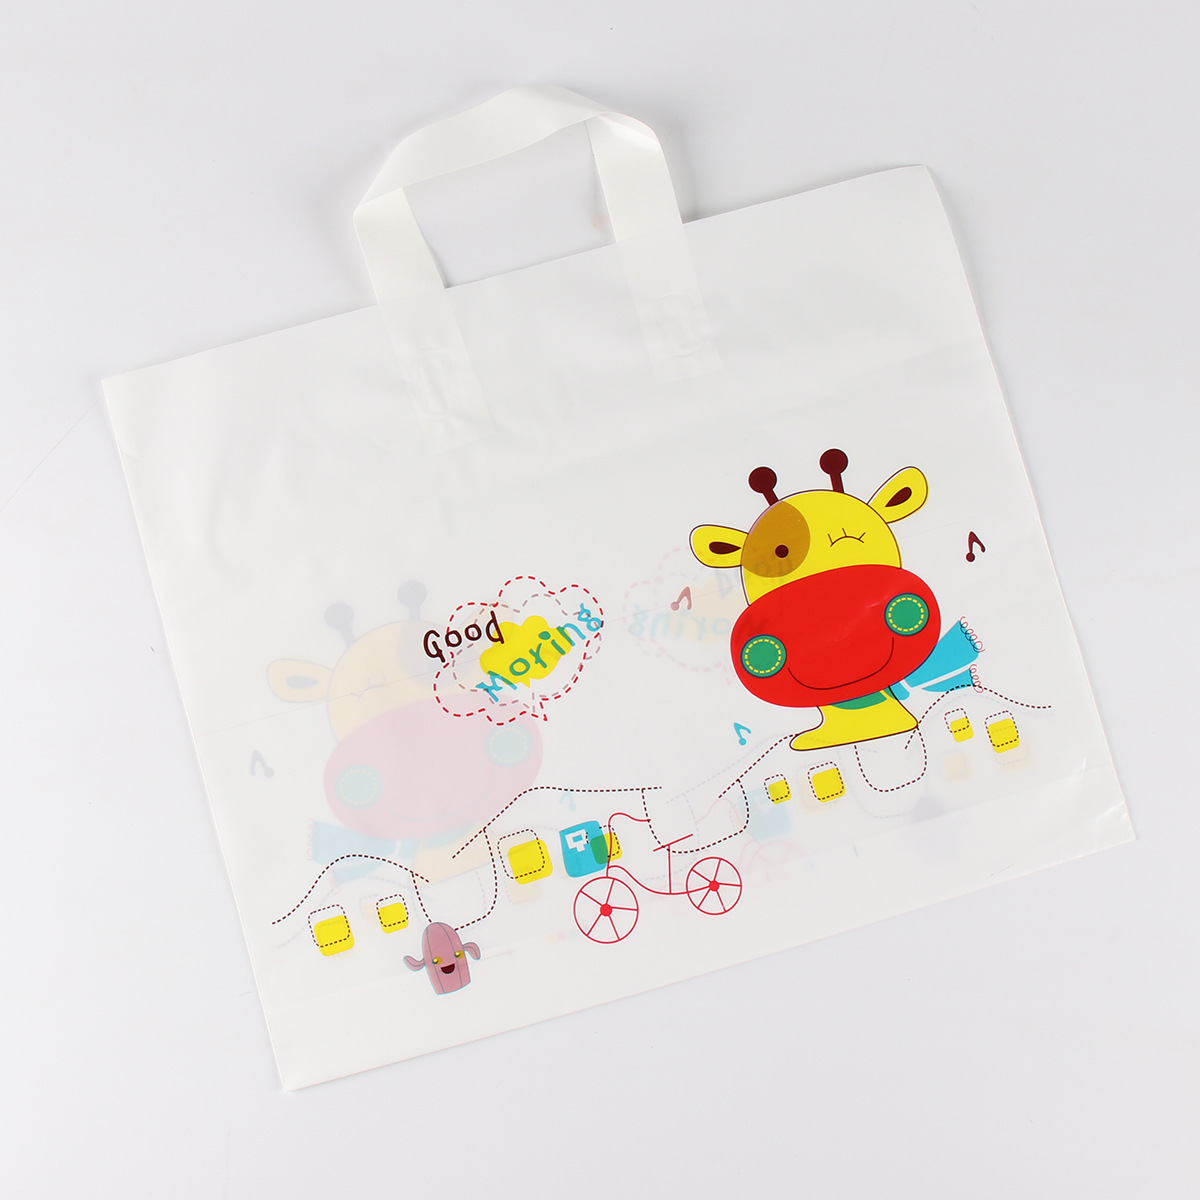 Plastic bags with customizable loop manufacturer Coplasem